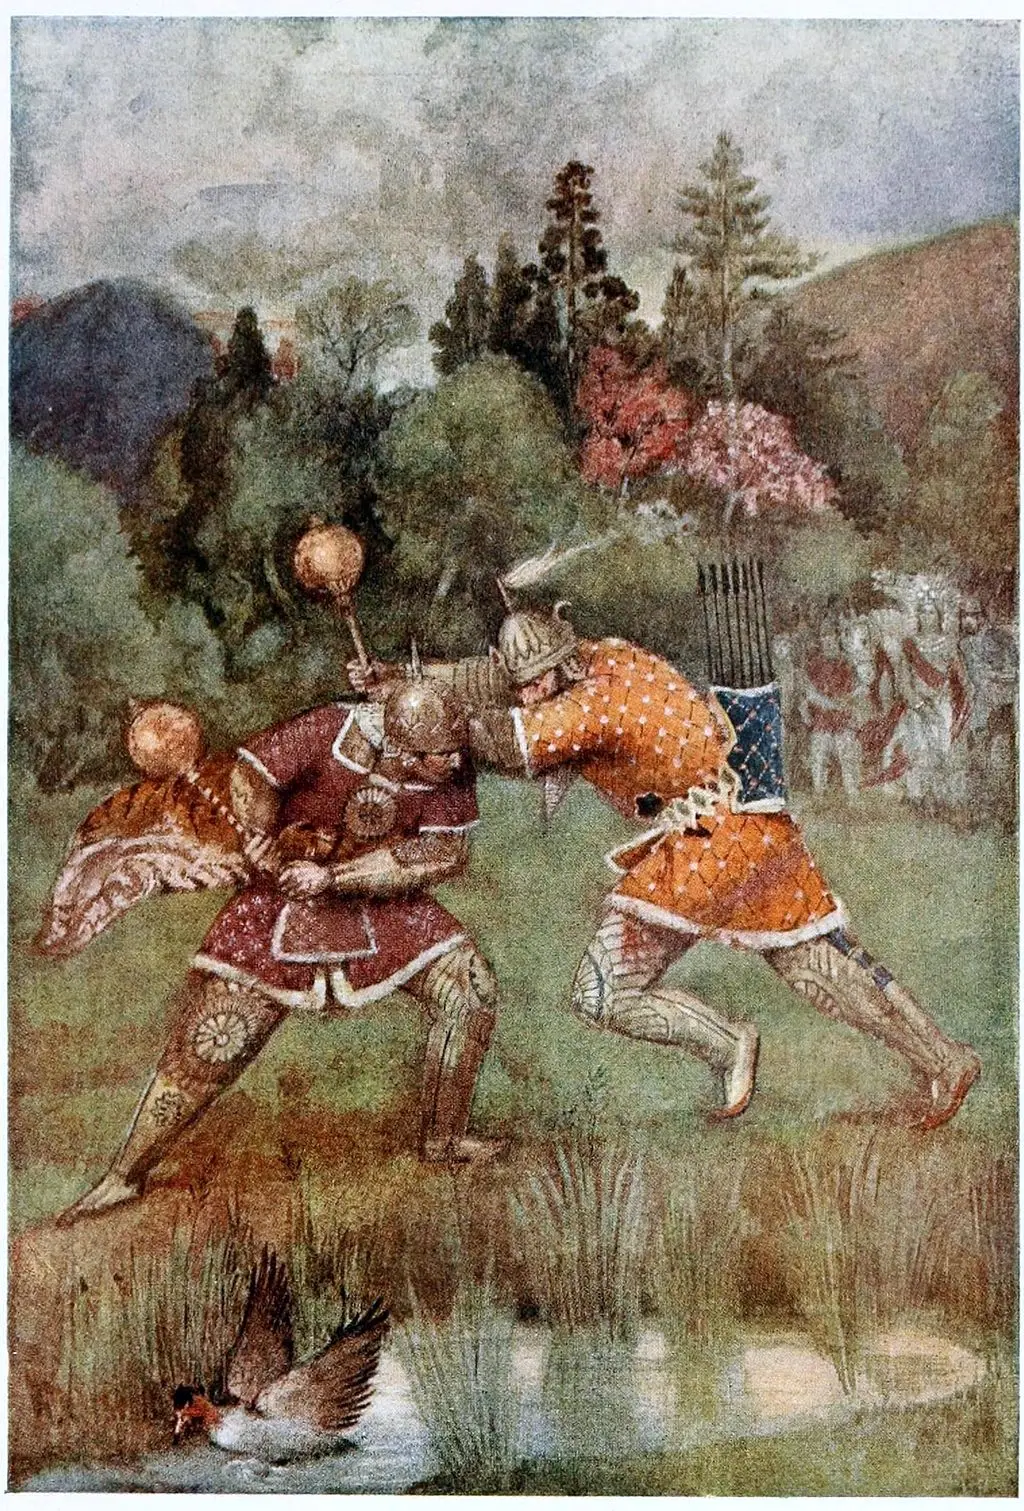 Duryodhana and Bhima battle with maces